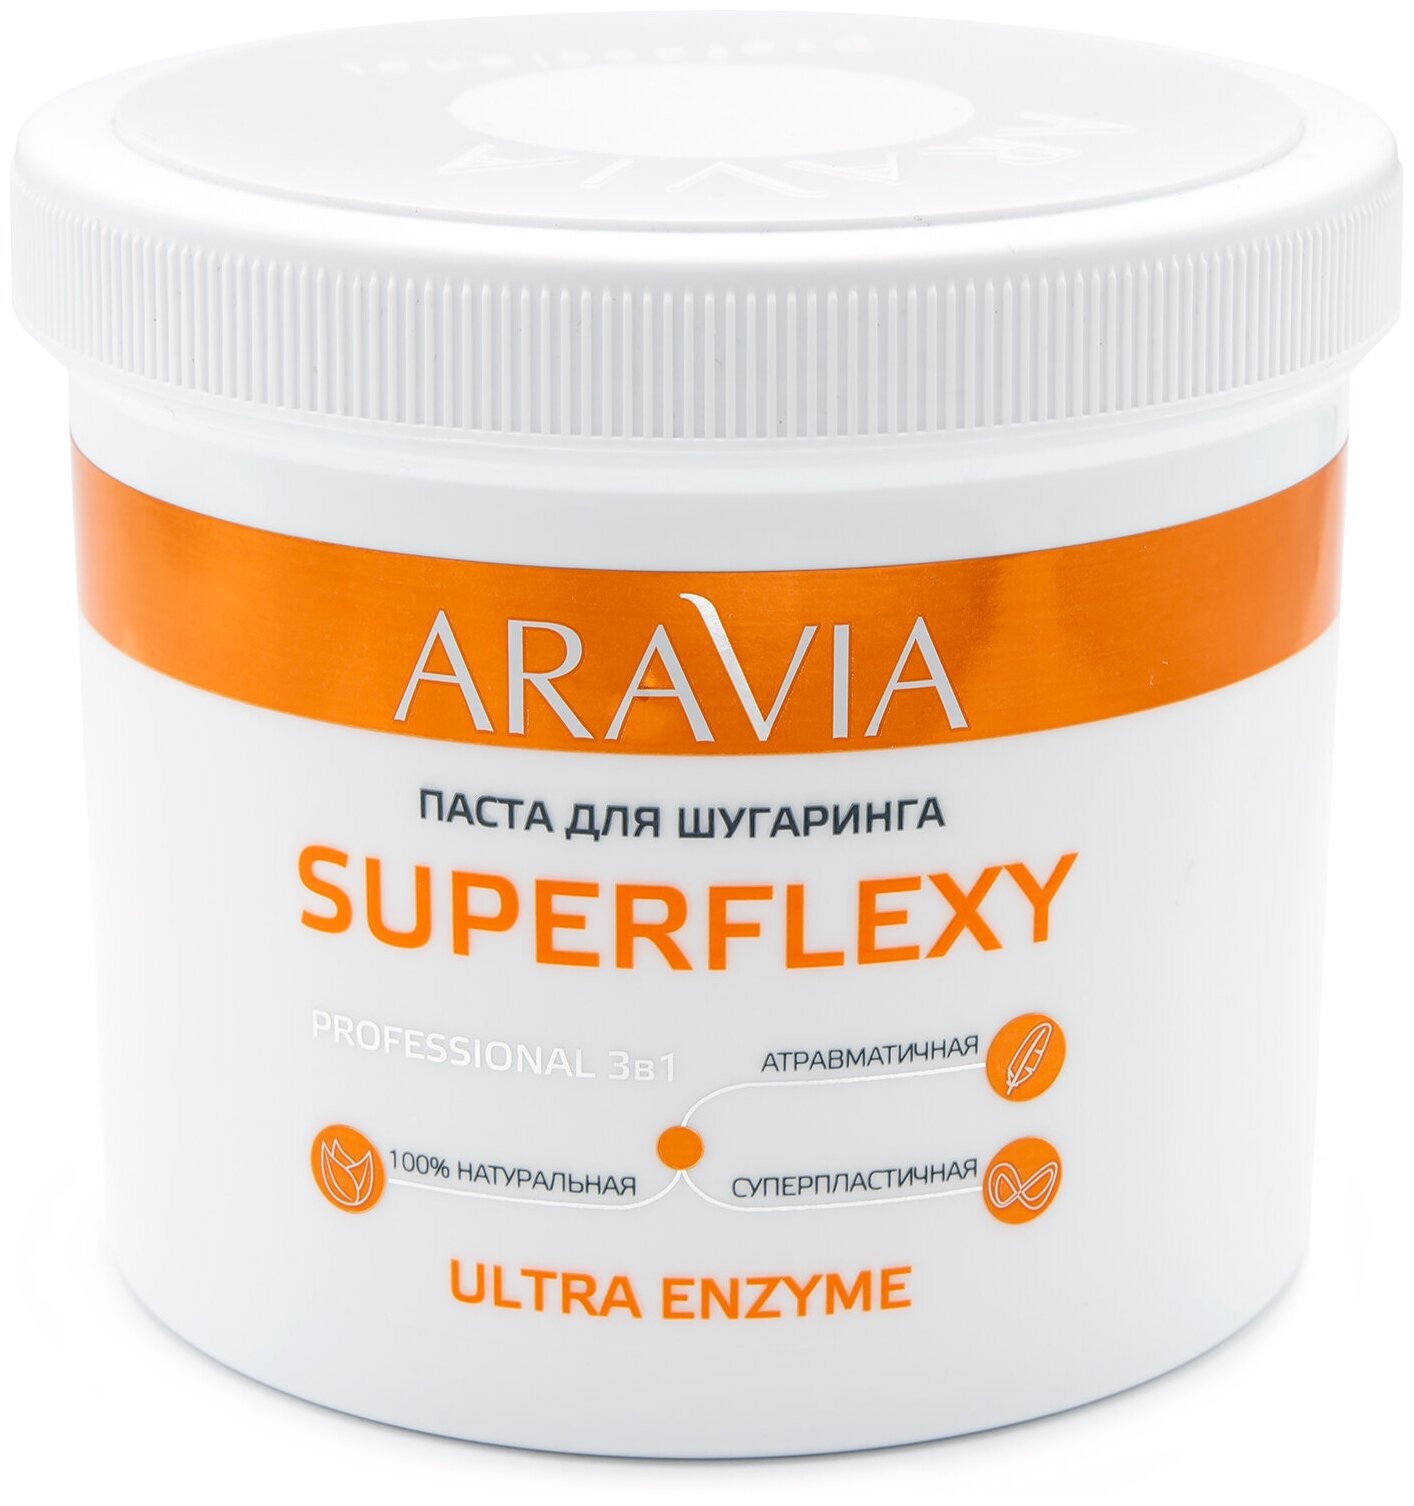 ARAVIA Паста для шугаринга Superflexy Ultra Enzyme 750 г